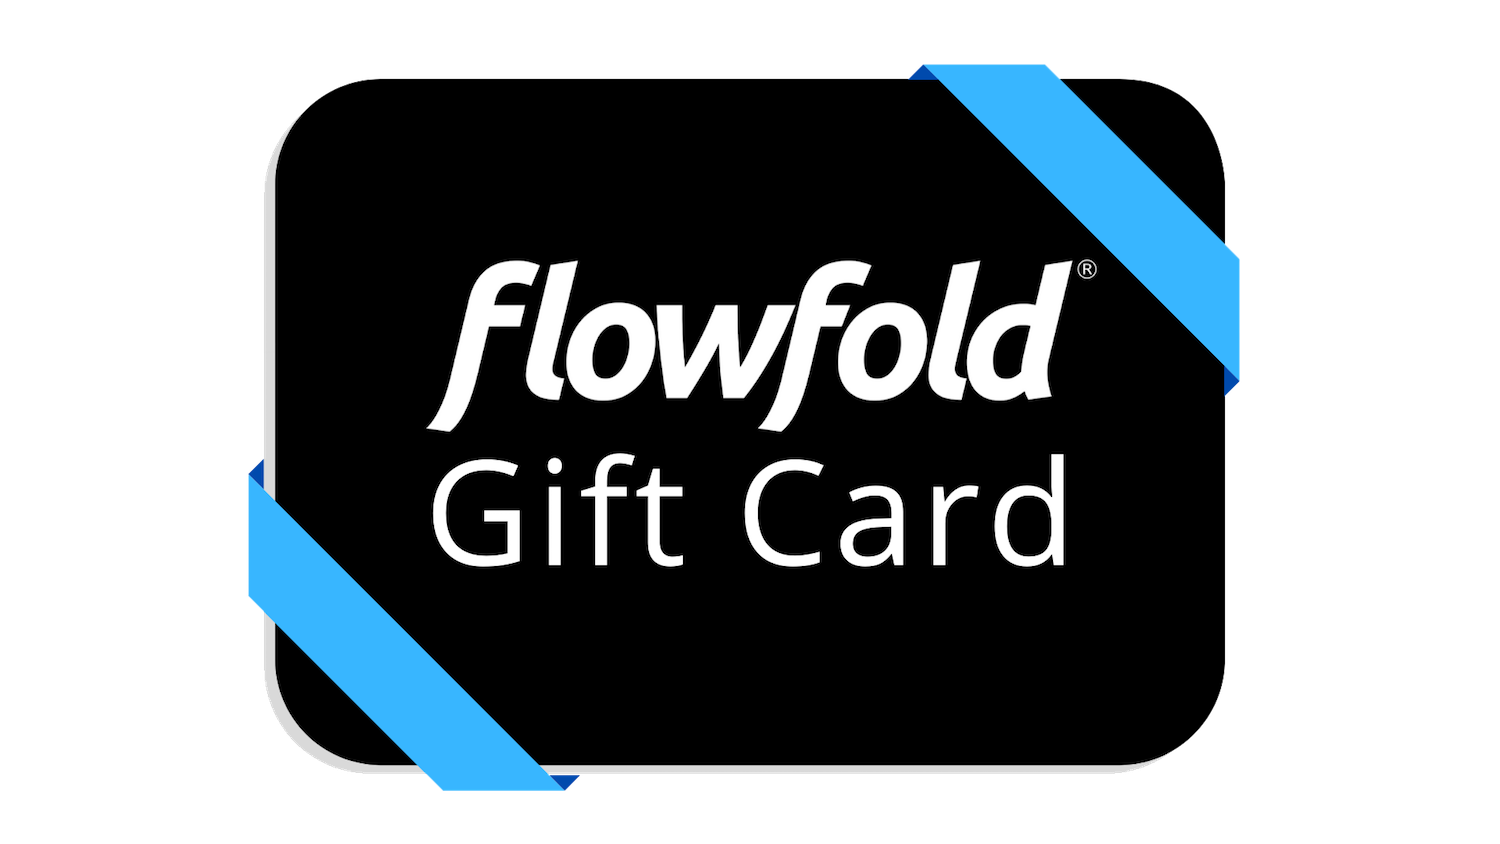 Flowfold Gift Card